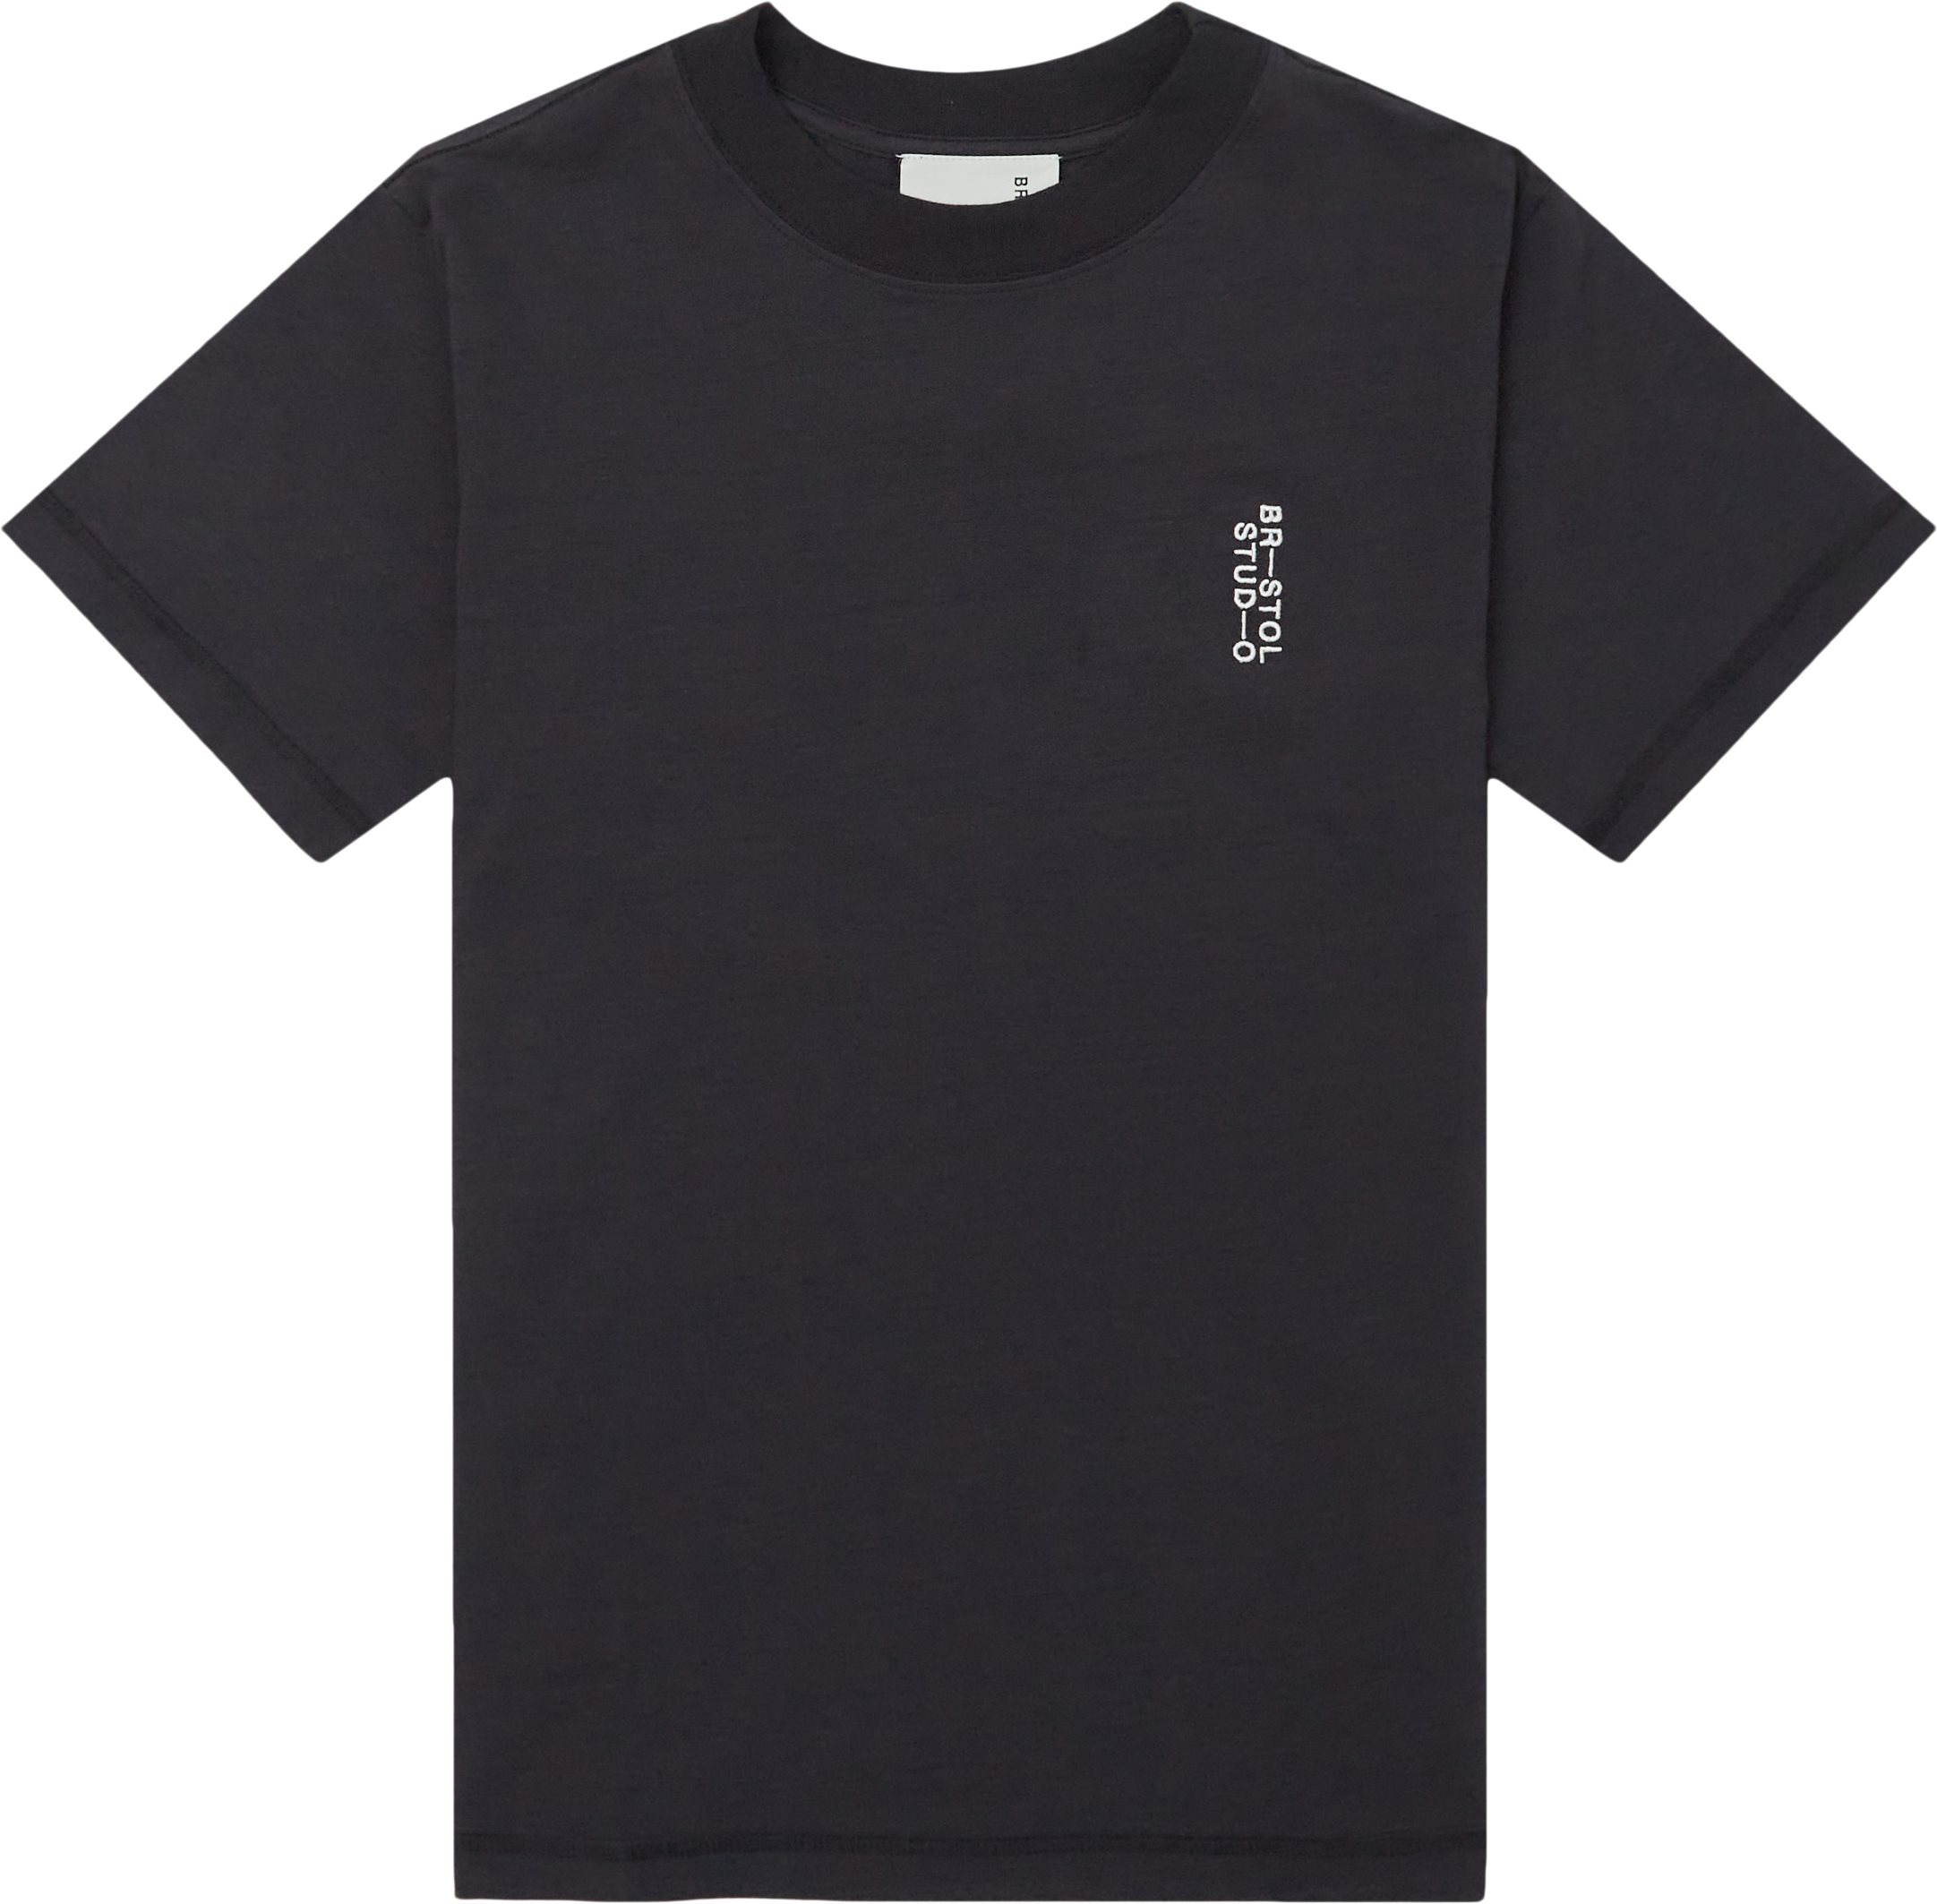 Signature Team Tee - T-shirts - Oversize fit - Black